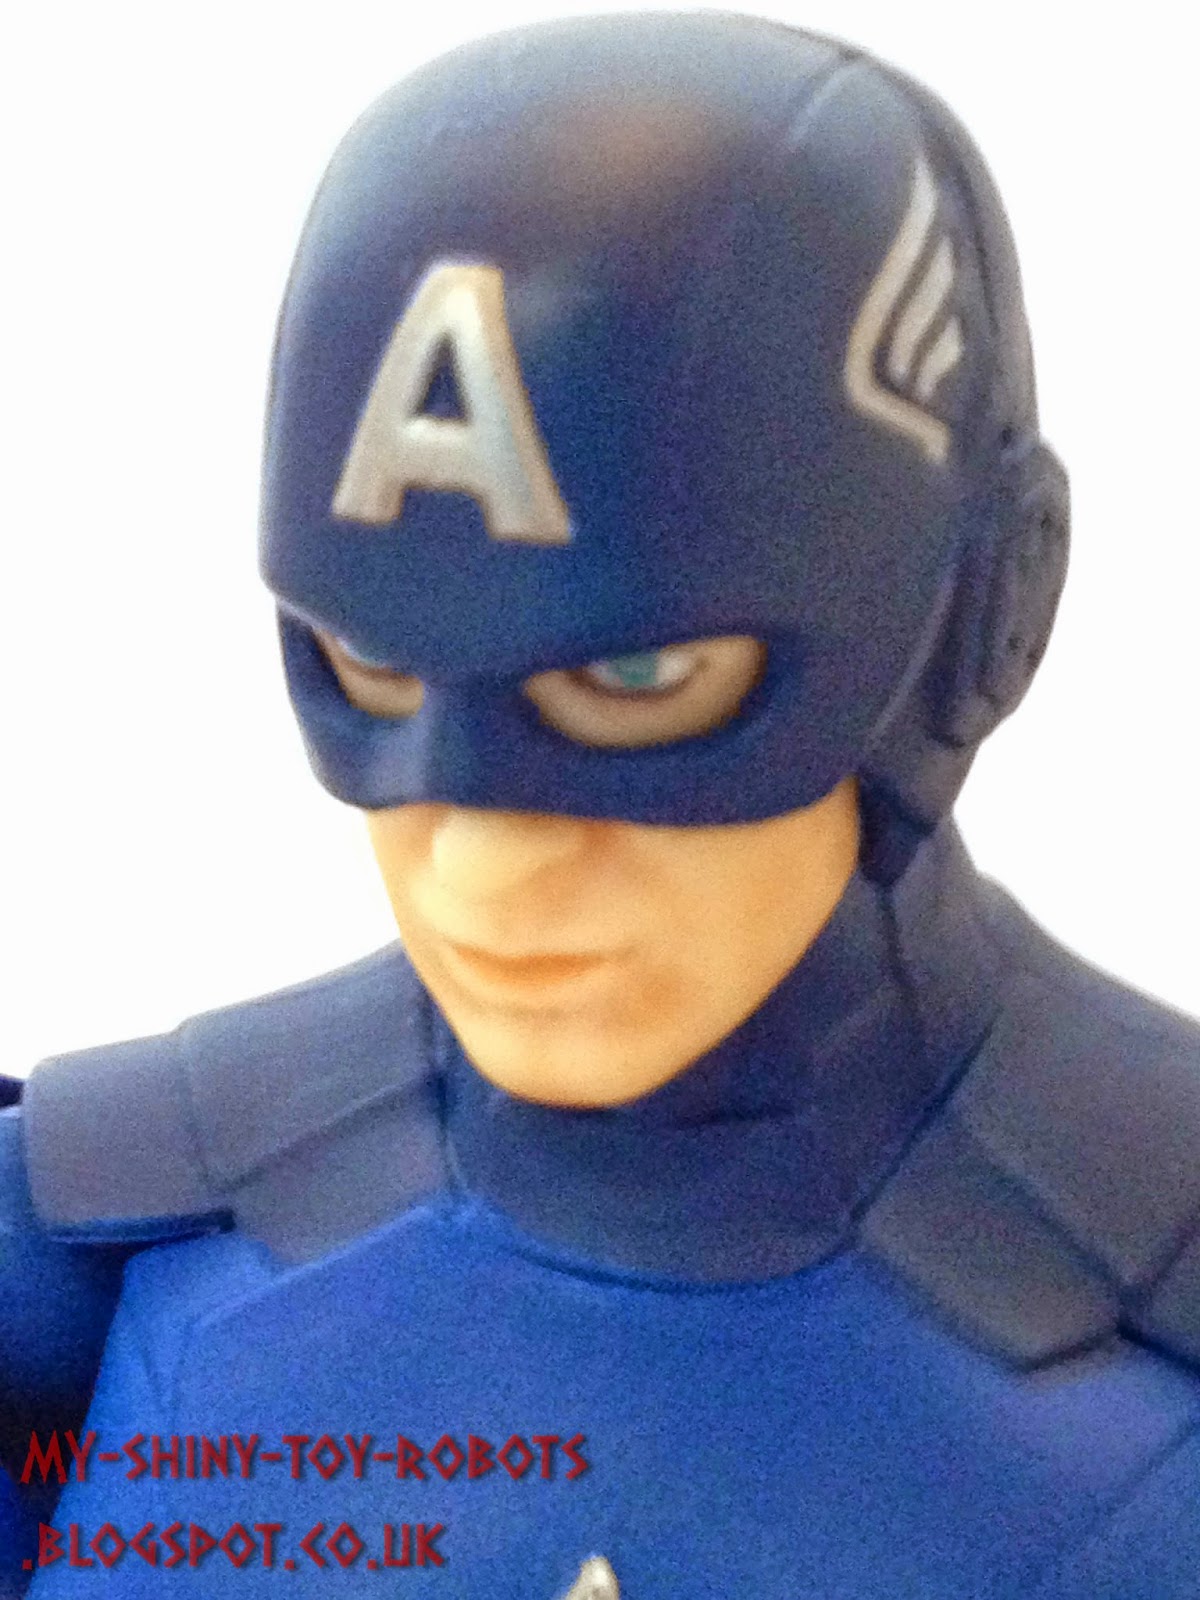 Figma Captain America